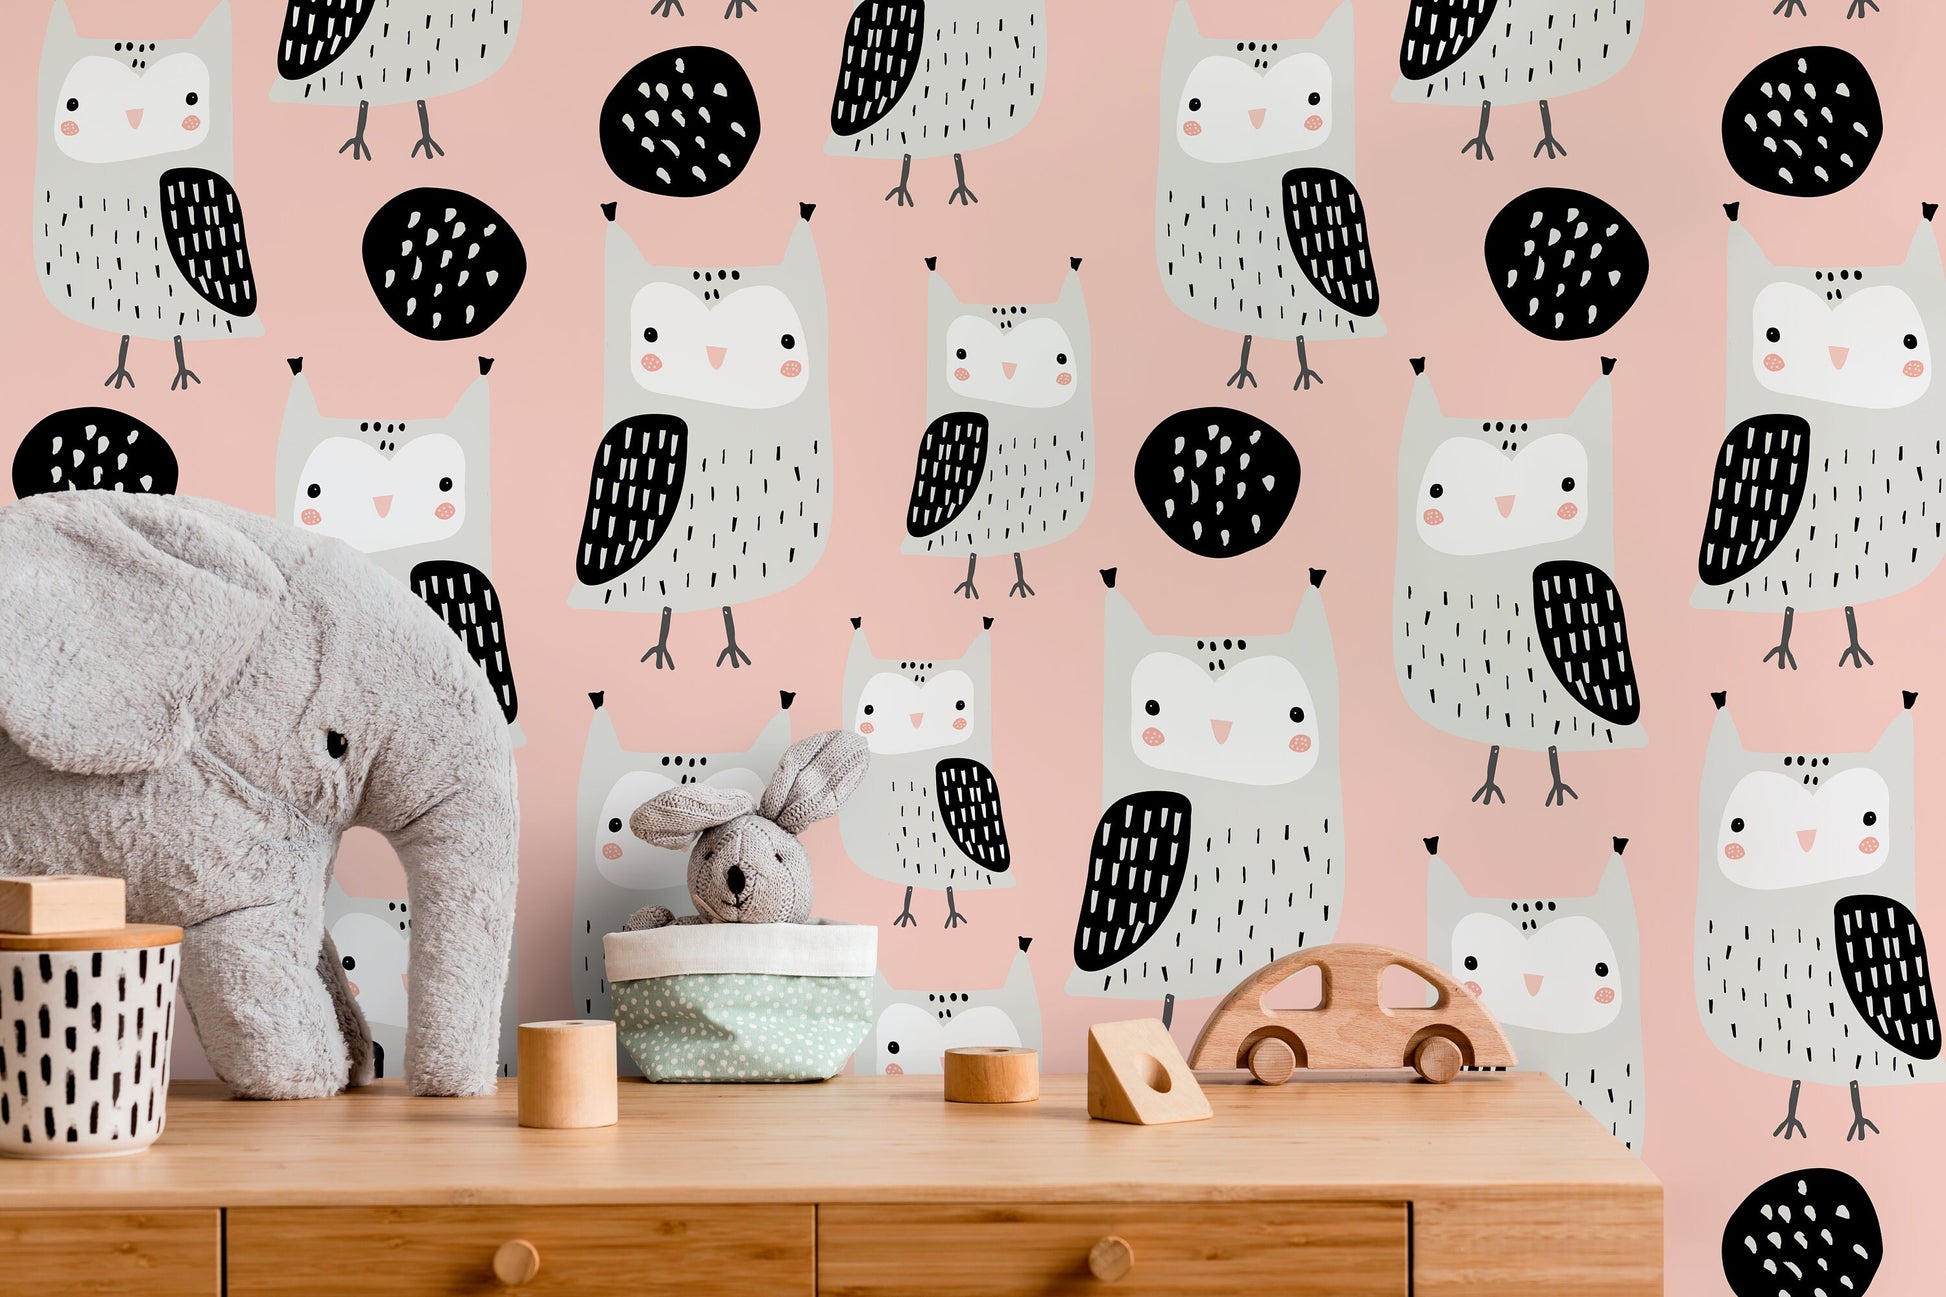 Cute Owl Nursery Wallpaper / Peel and Stick Wallpaper Removable Wallpaper Home Decor Wall Art Wall Decor Room Decor - D106